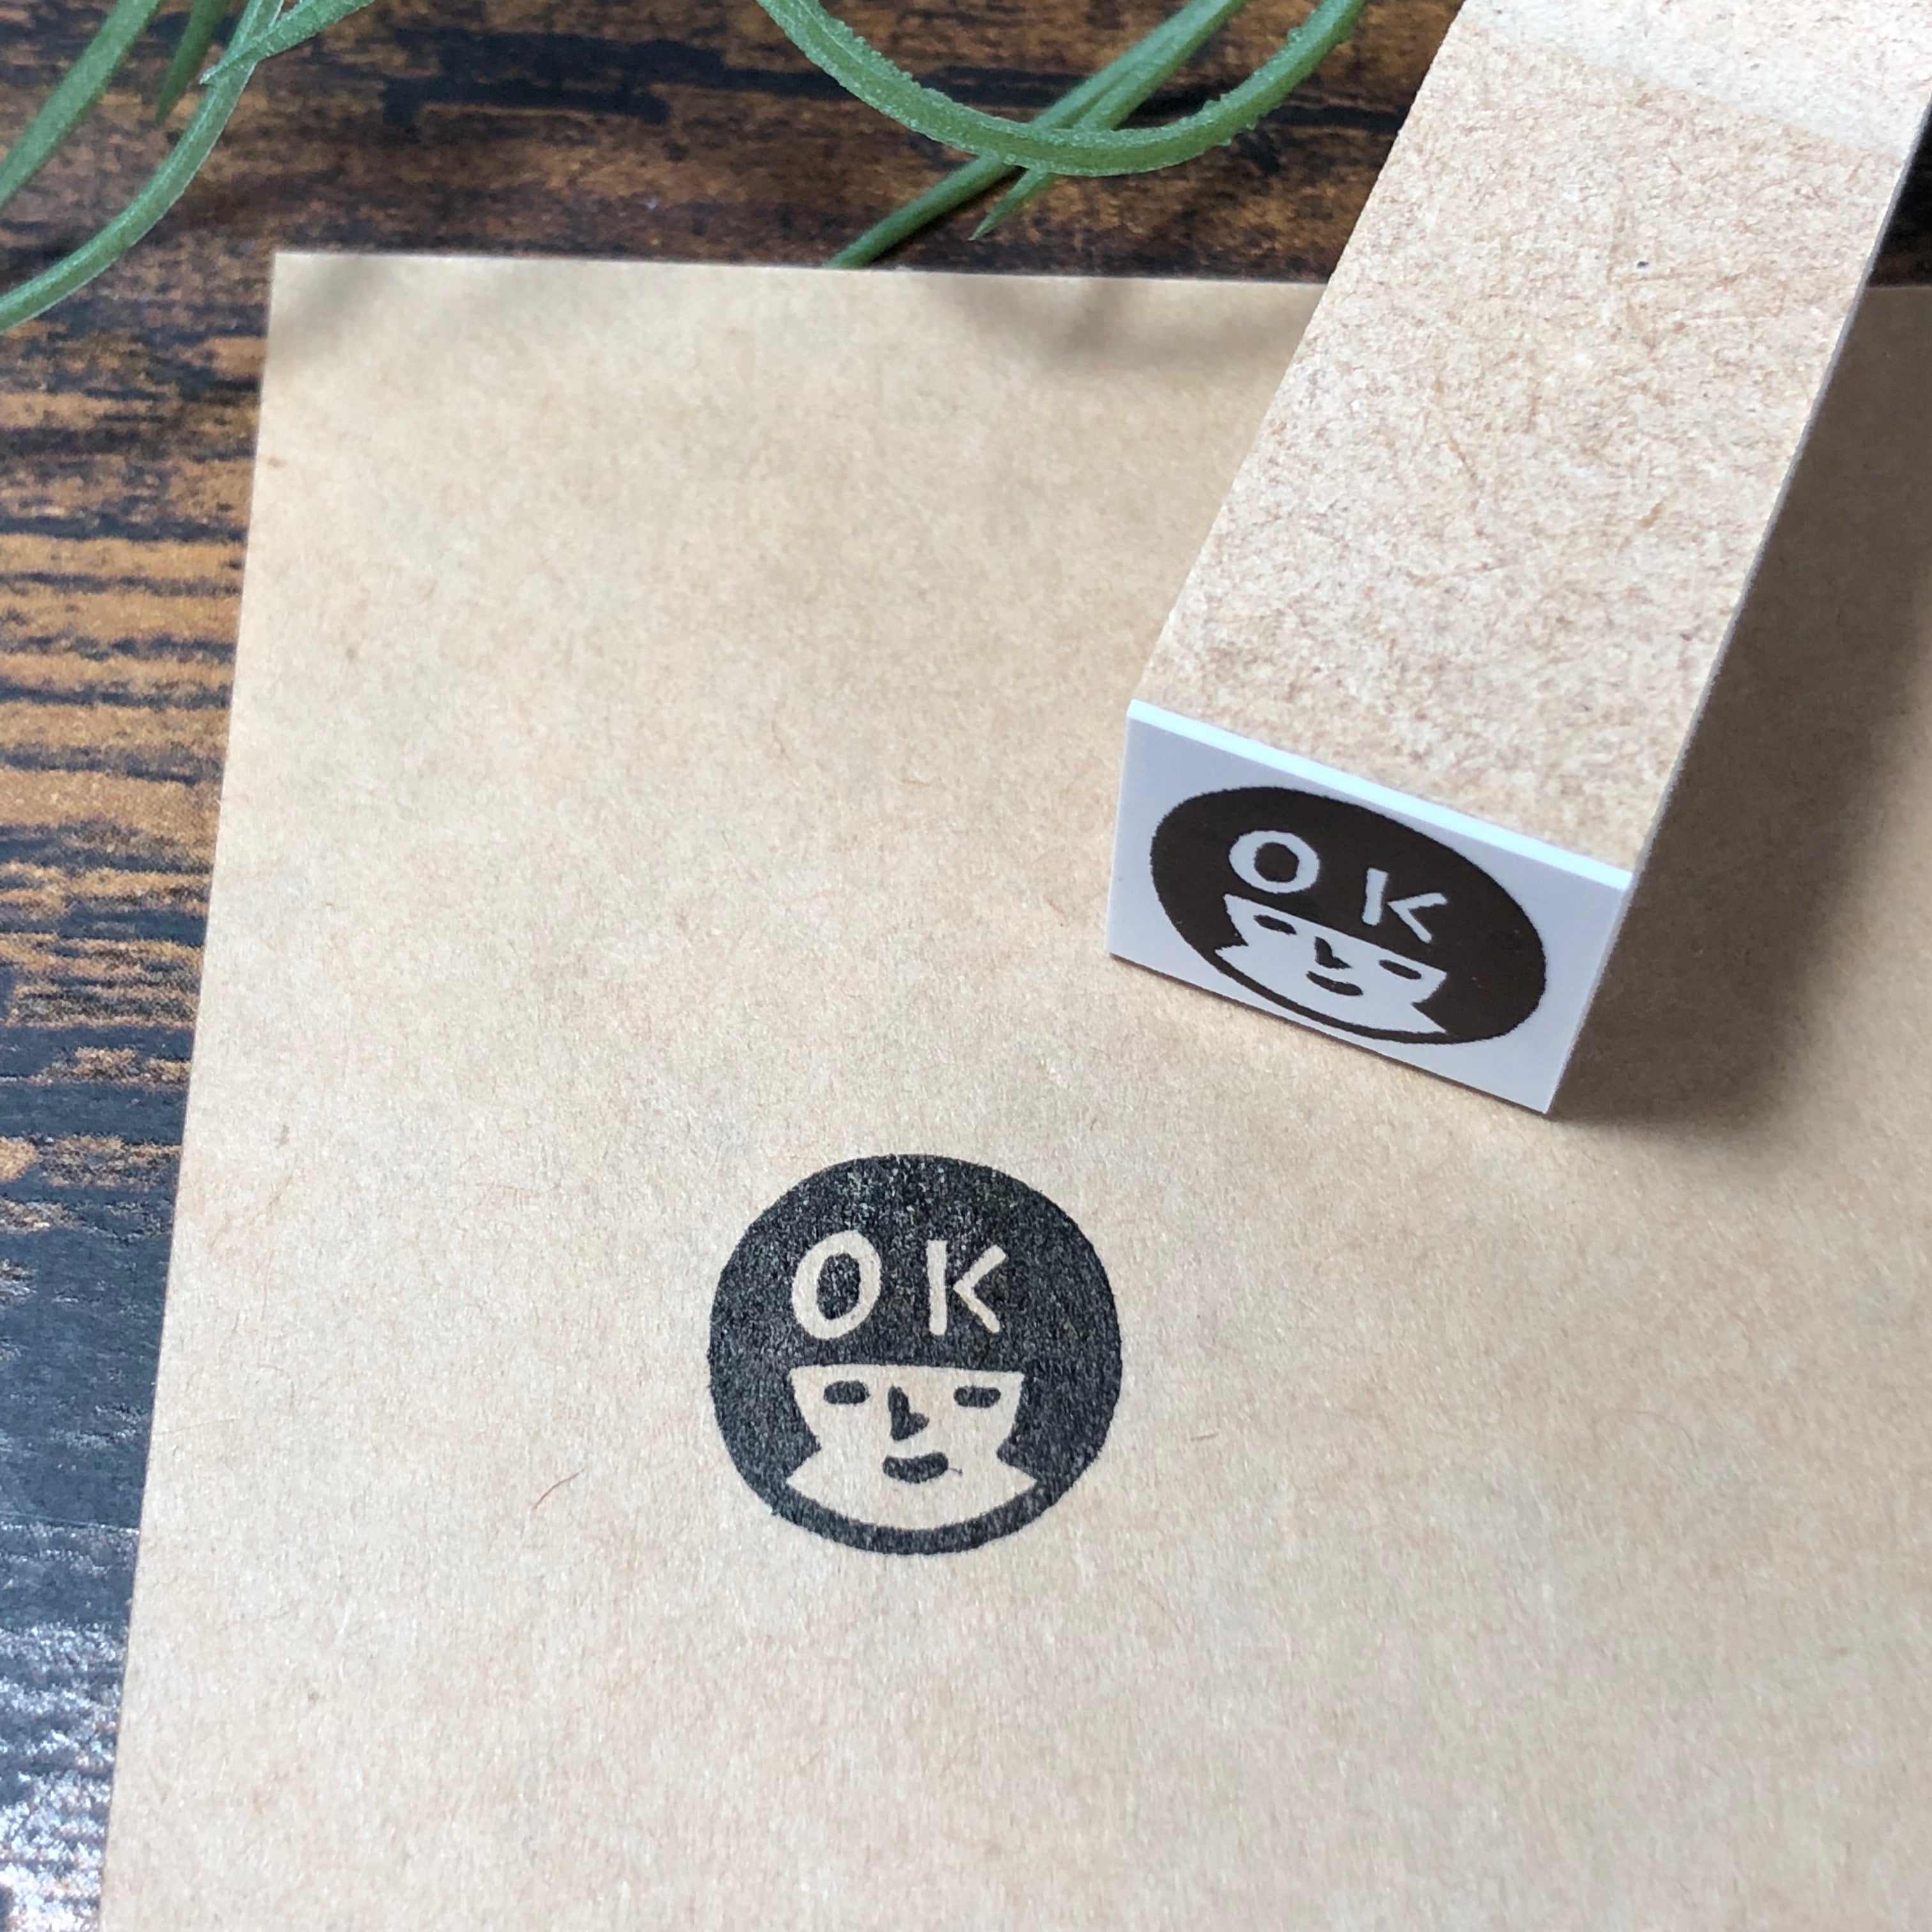 Okappa Girl "OK" Face Stamp